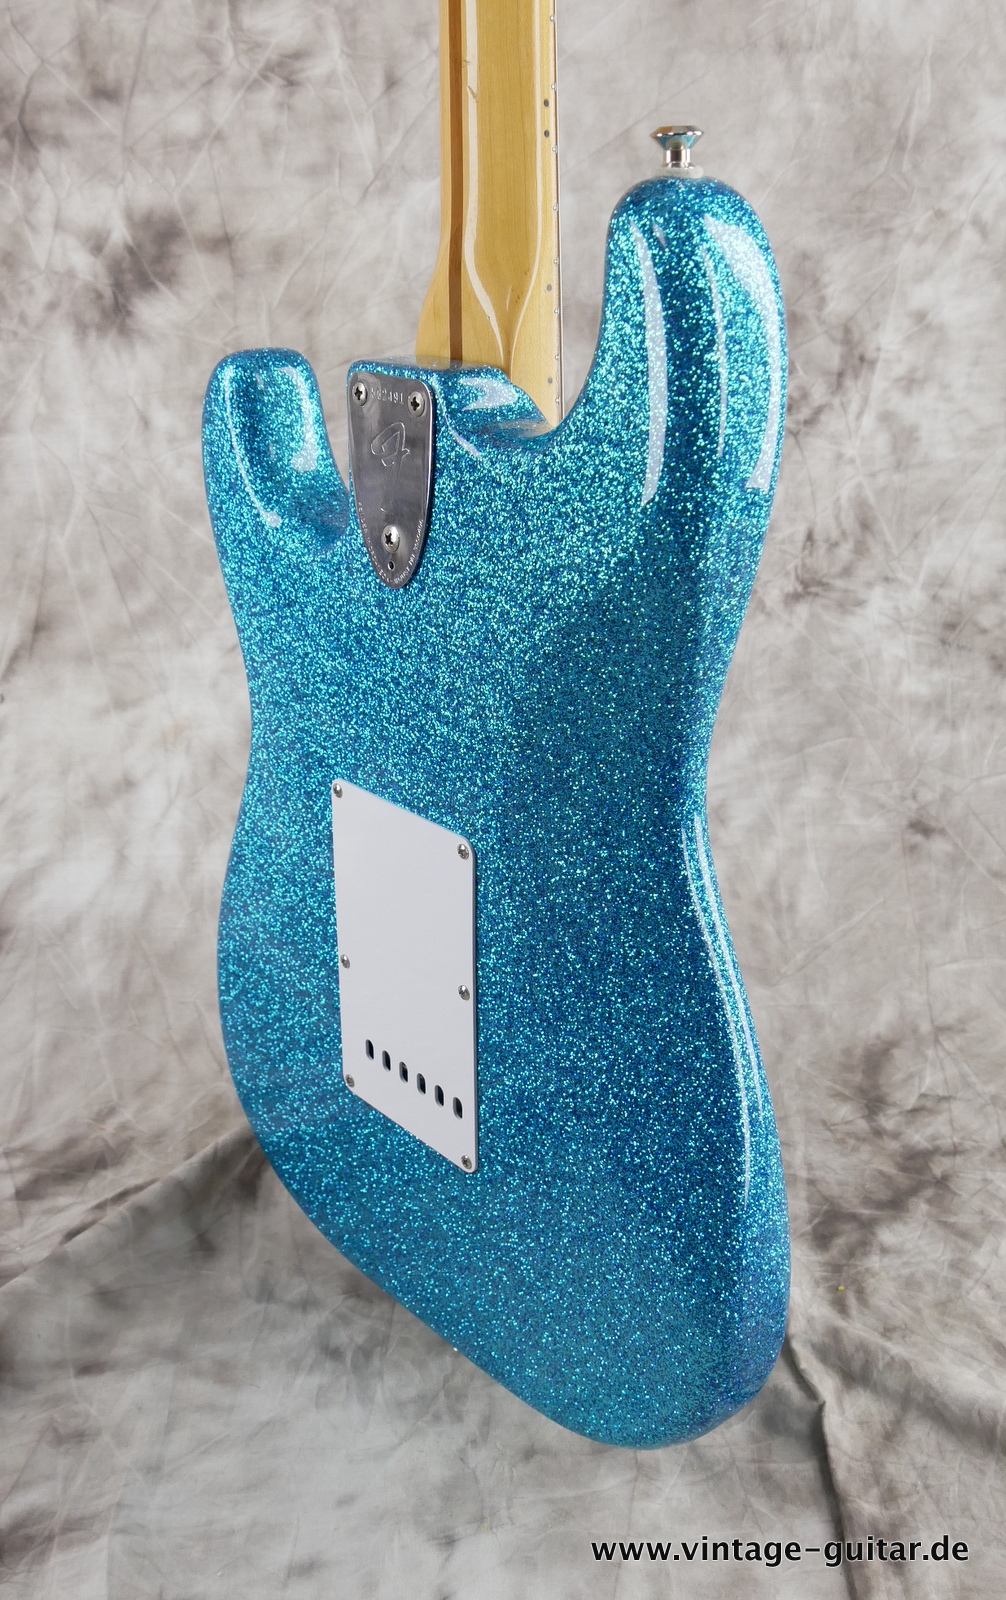 img/vintage/5223/Fender-Stratocaster-1974c-blue-sparkle-011.JPG